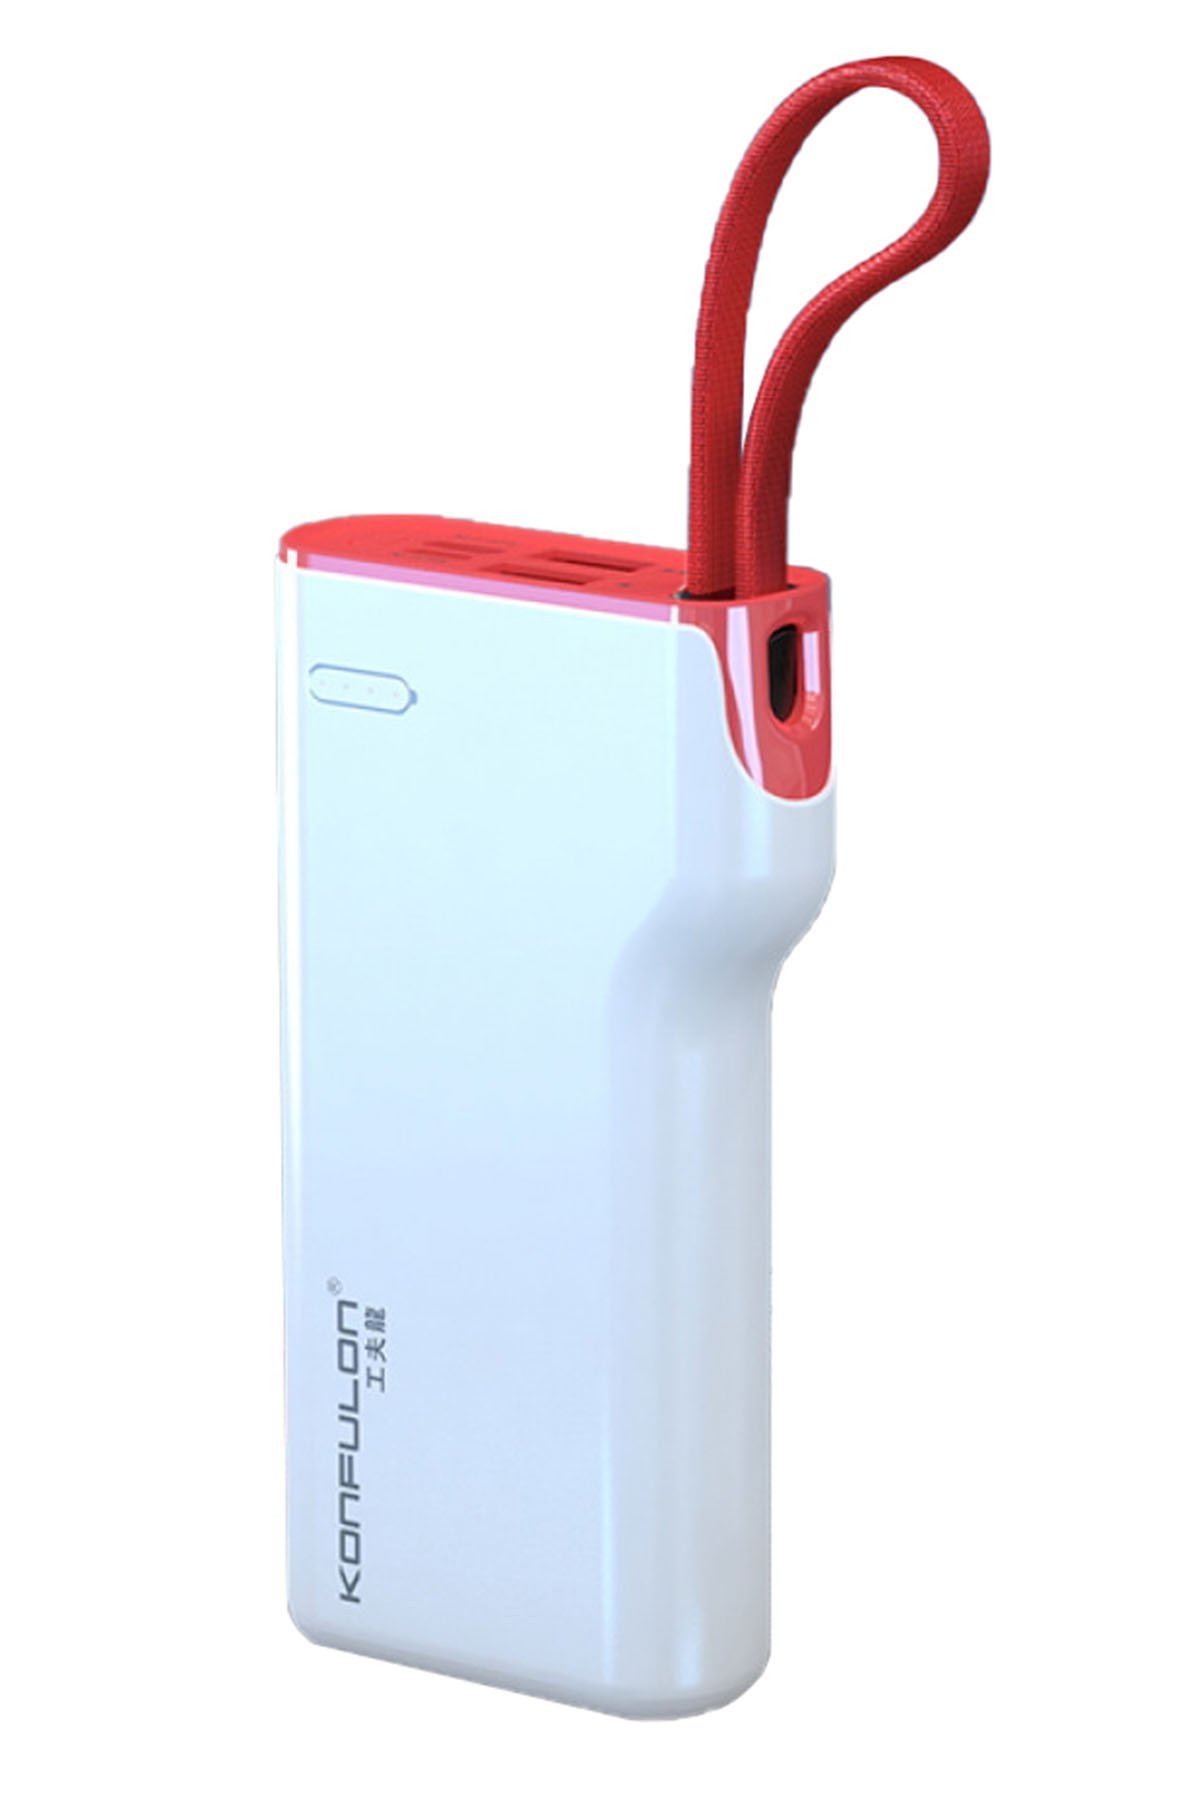 Konfulon DC01 Süper Hızlı Micro USB Kablo 1M 2.4A - Kırmızı